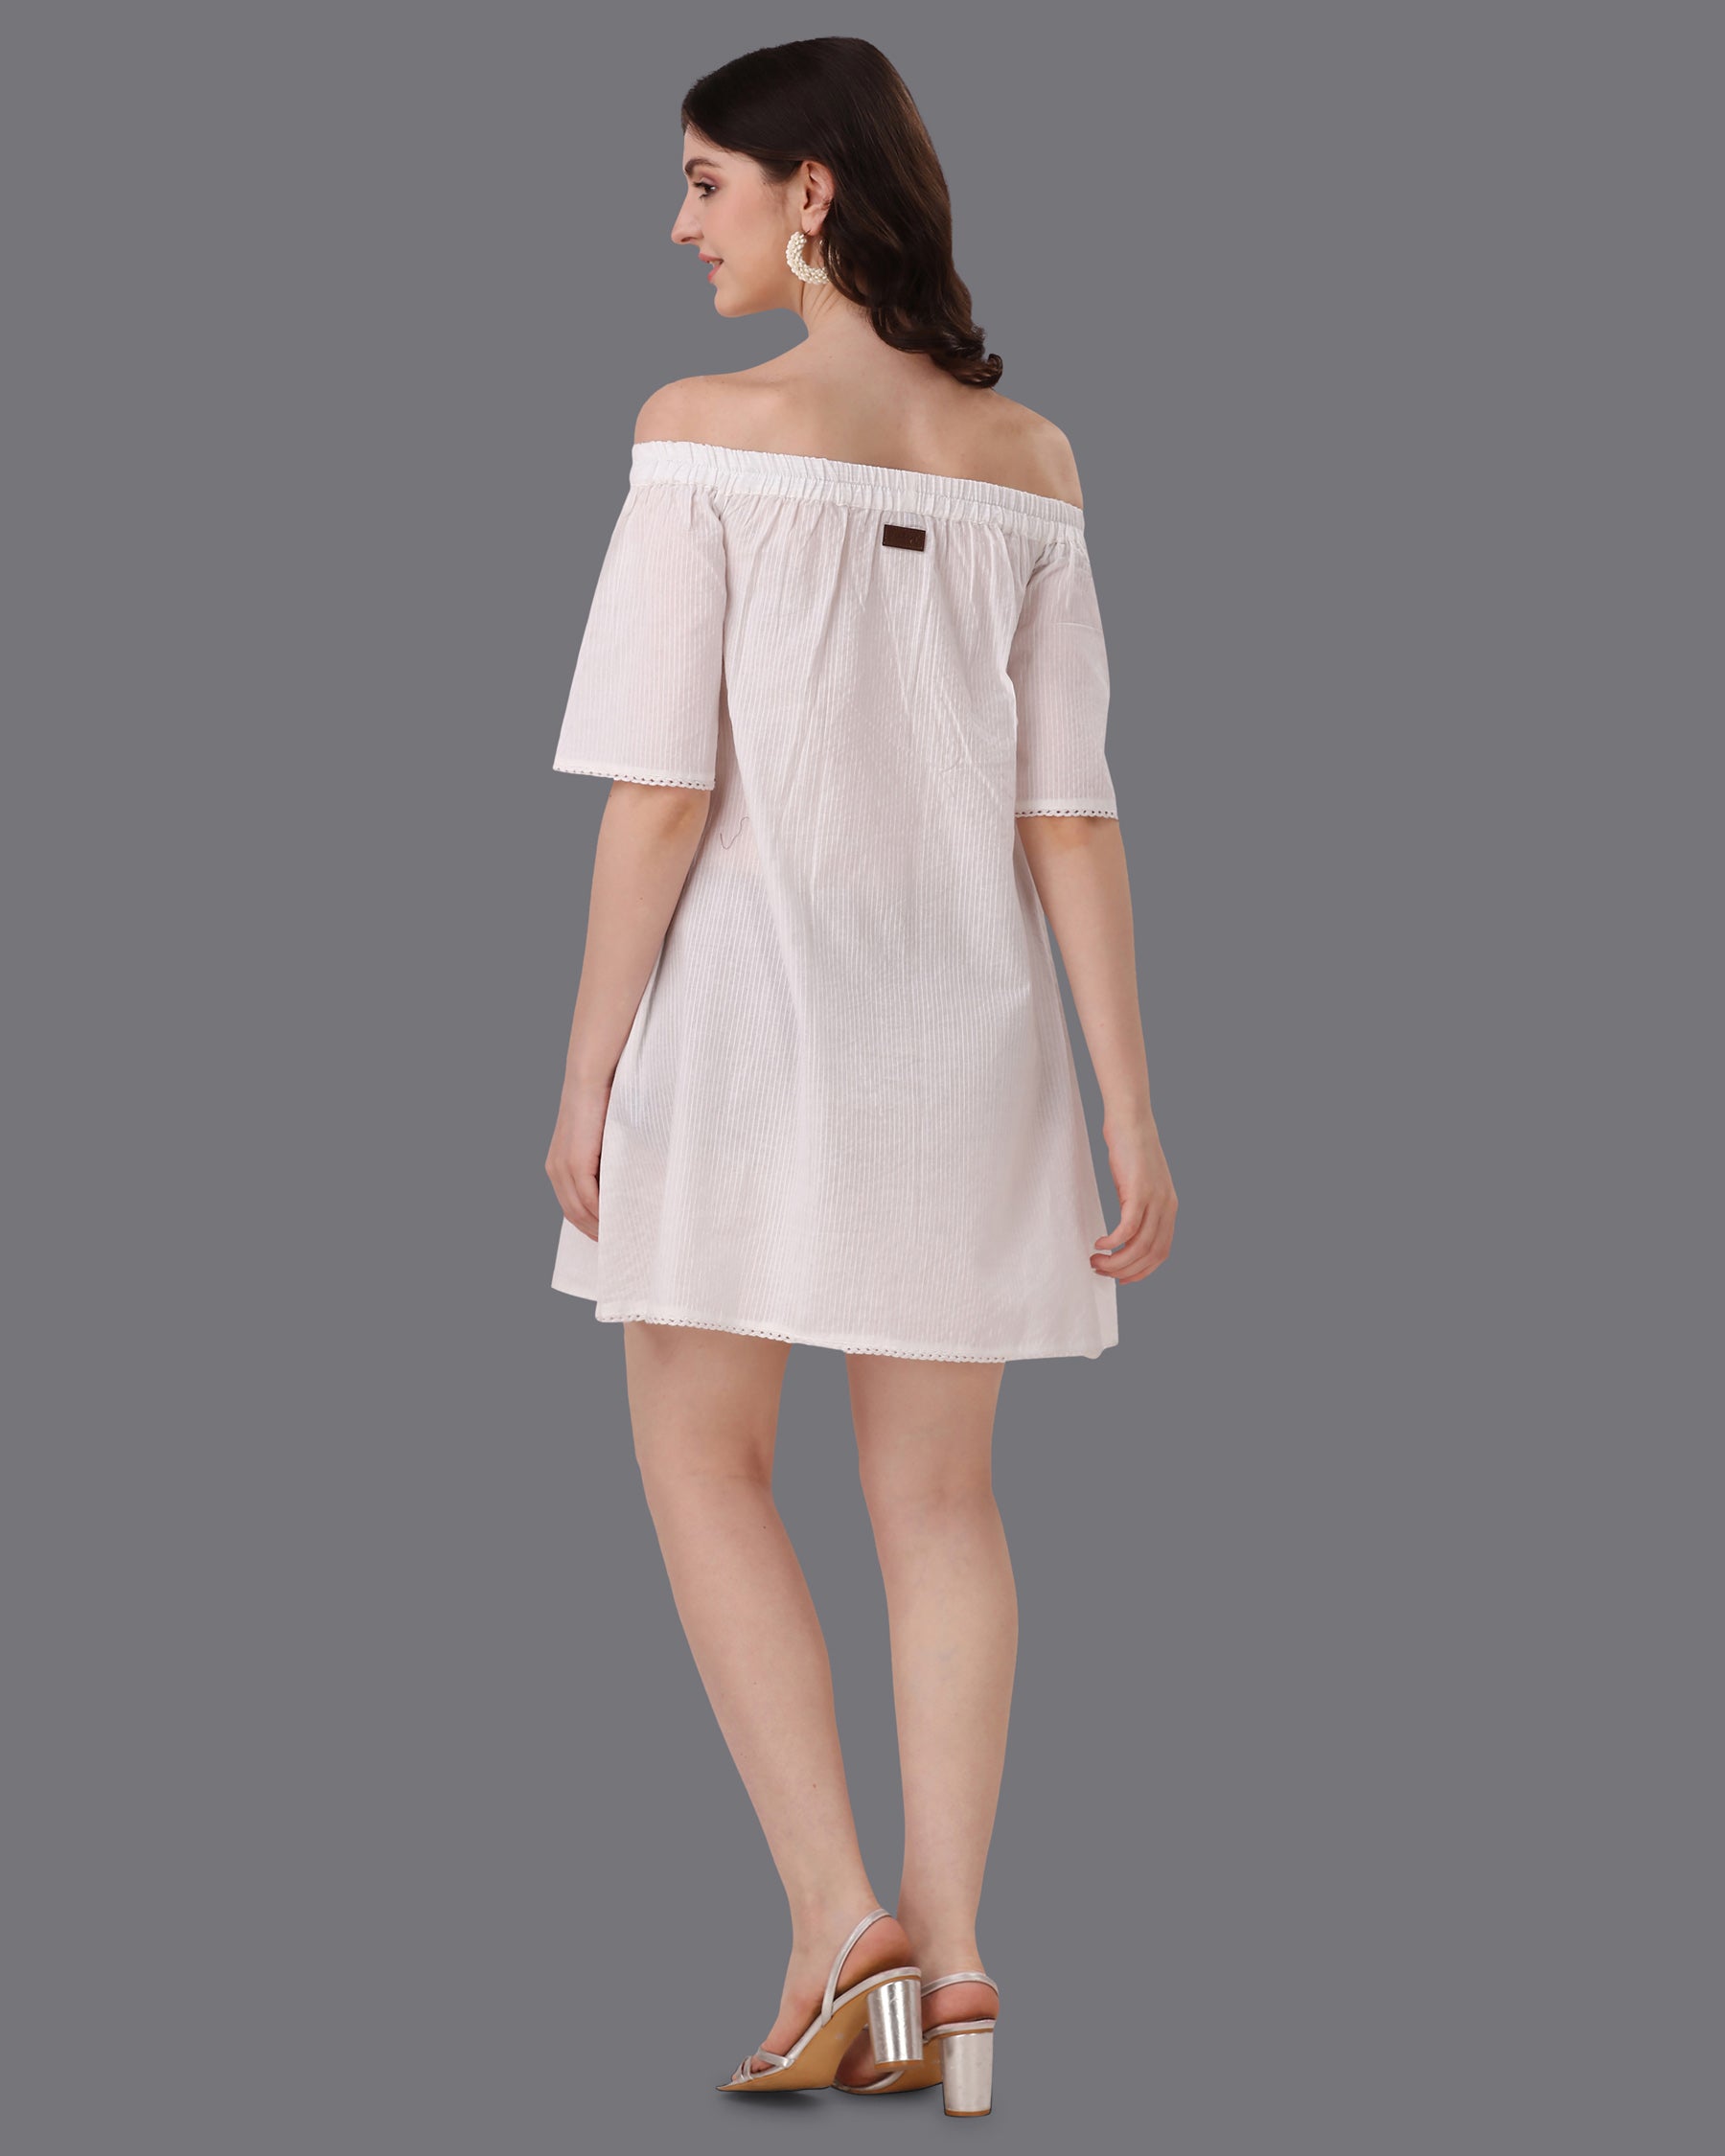 Bright White Pinstriped Super Soft Premium Cotton Off-shoulder Dress WD043-32, WD043-34, WD043-36, WD043-38, WD043-40, WD043-42